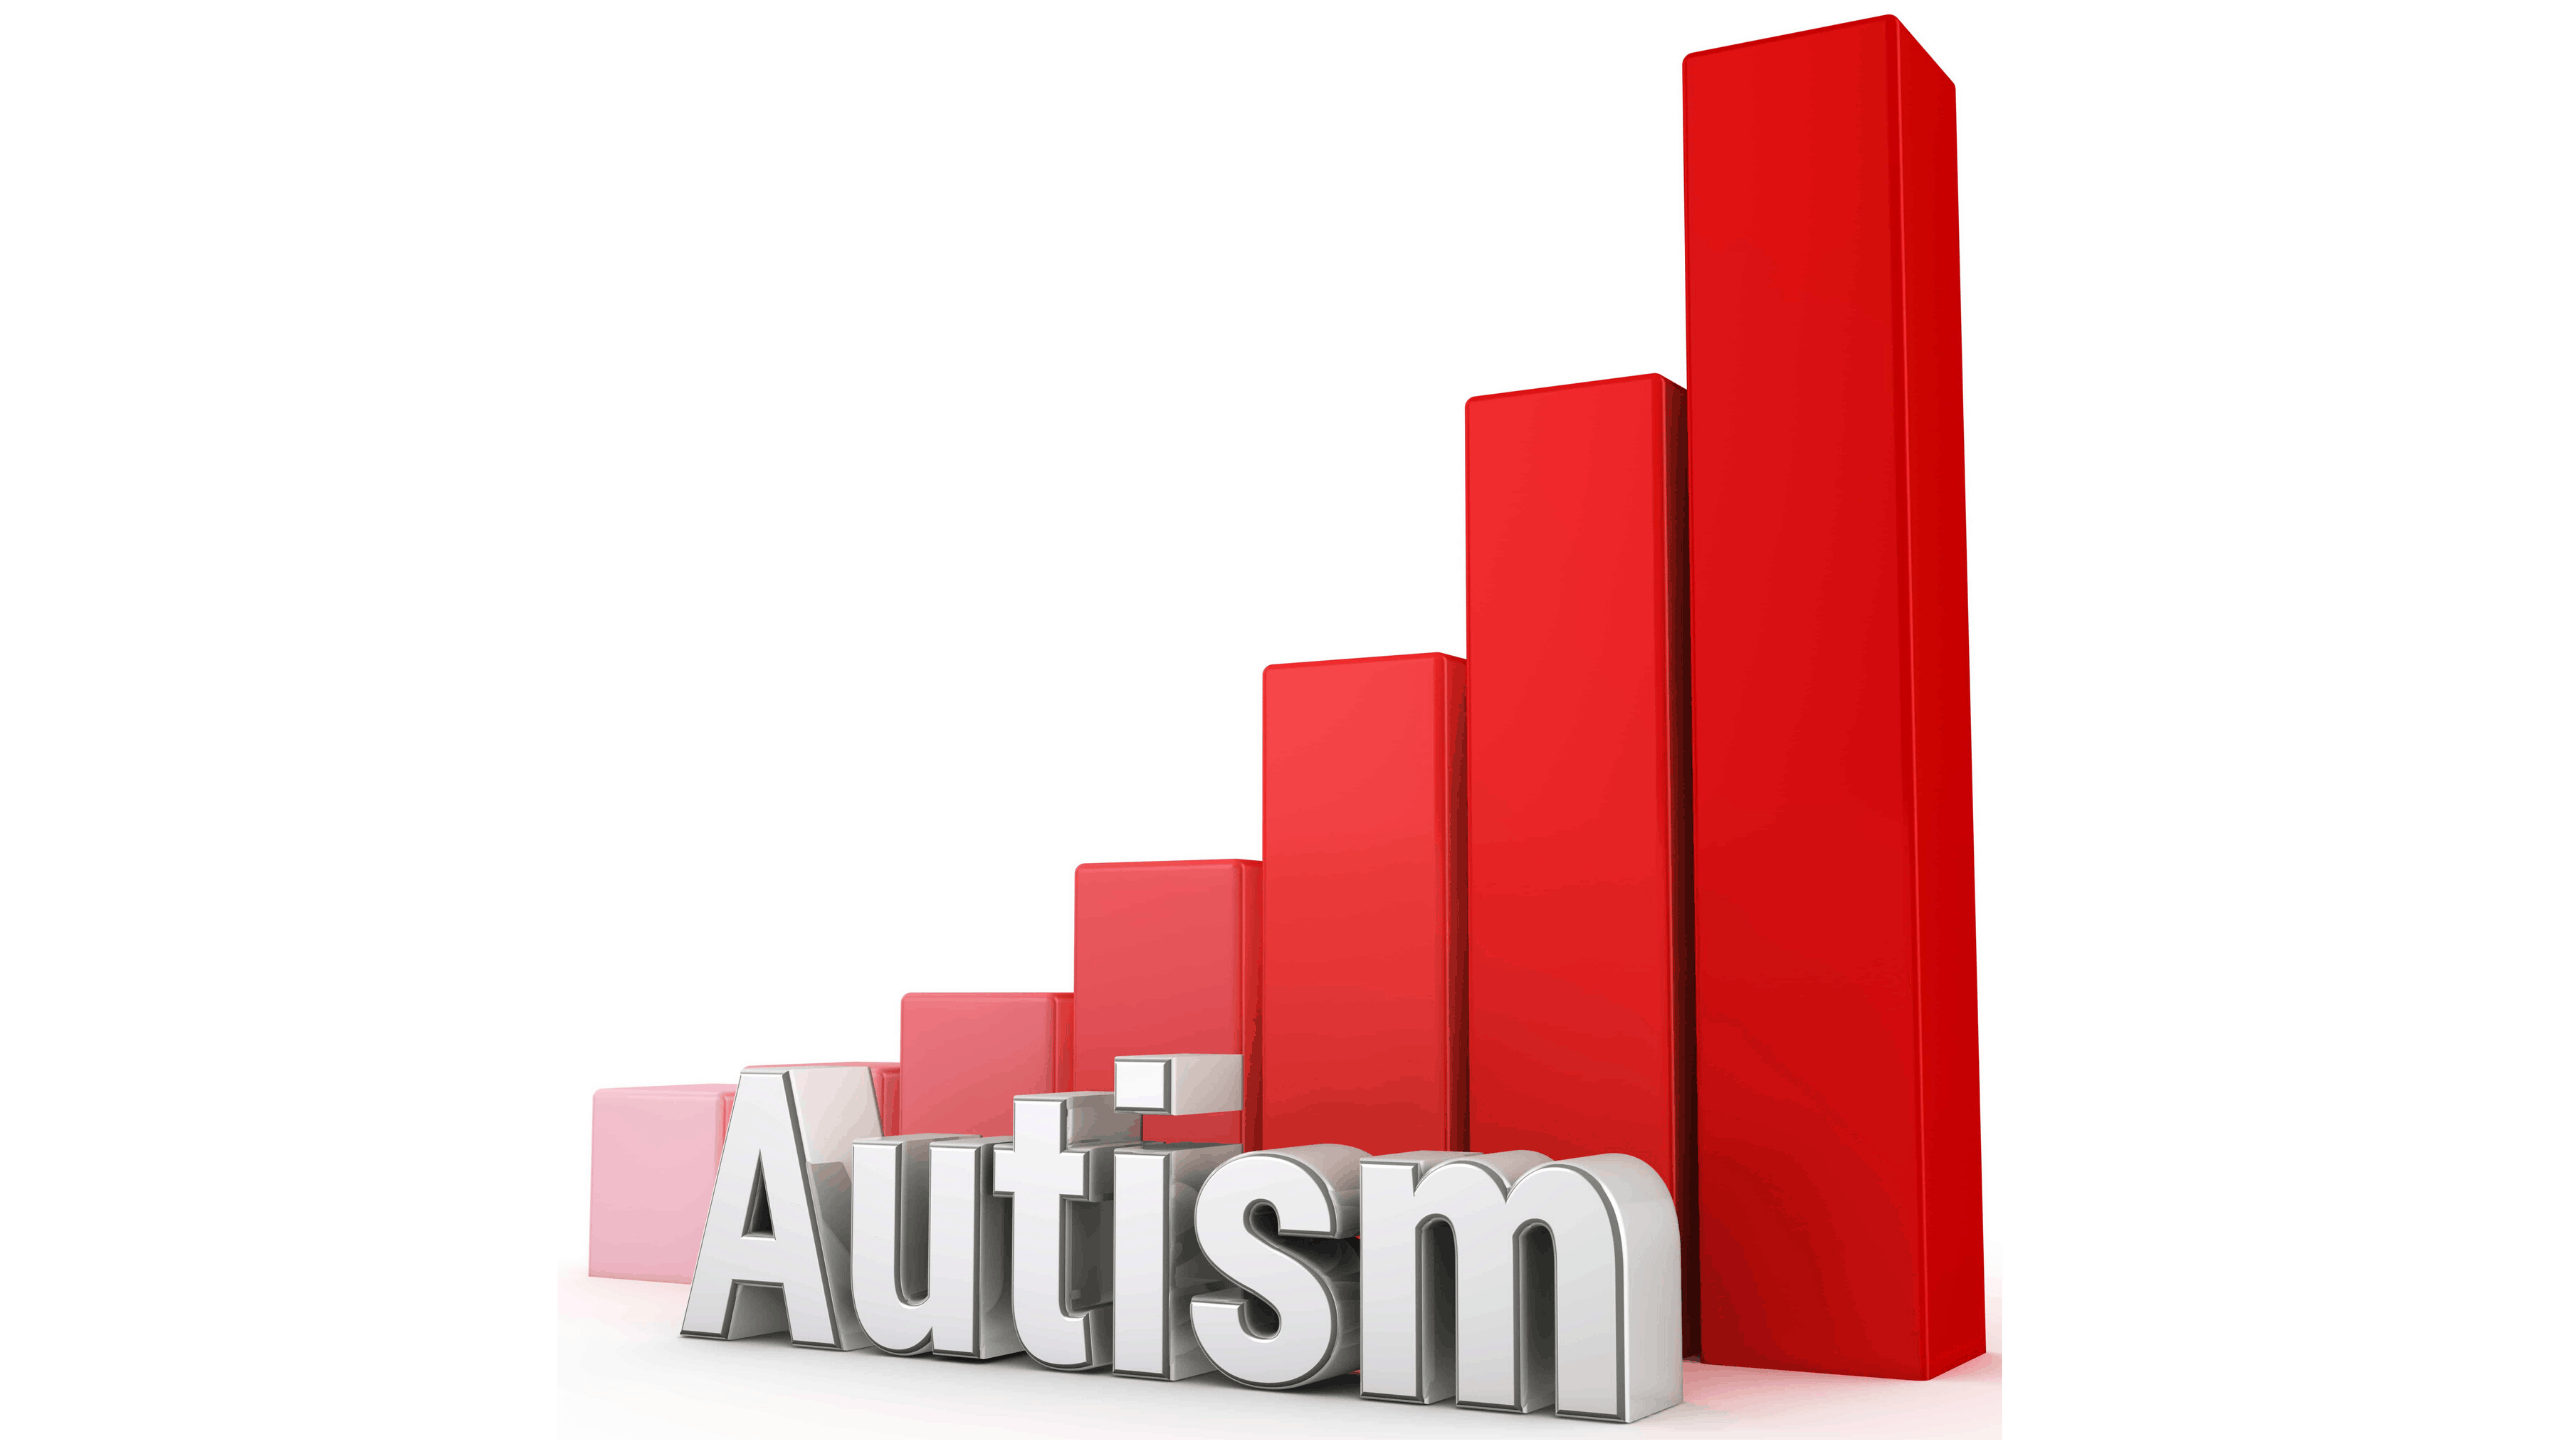 autism prevalence estimate